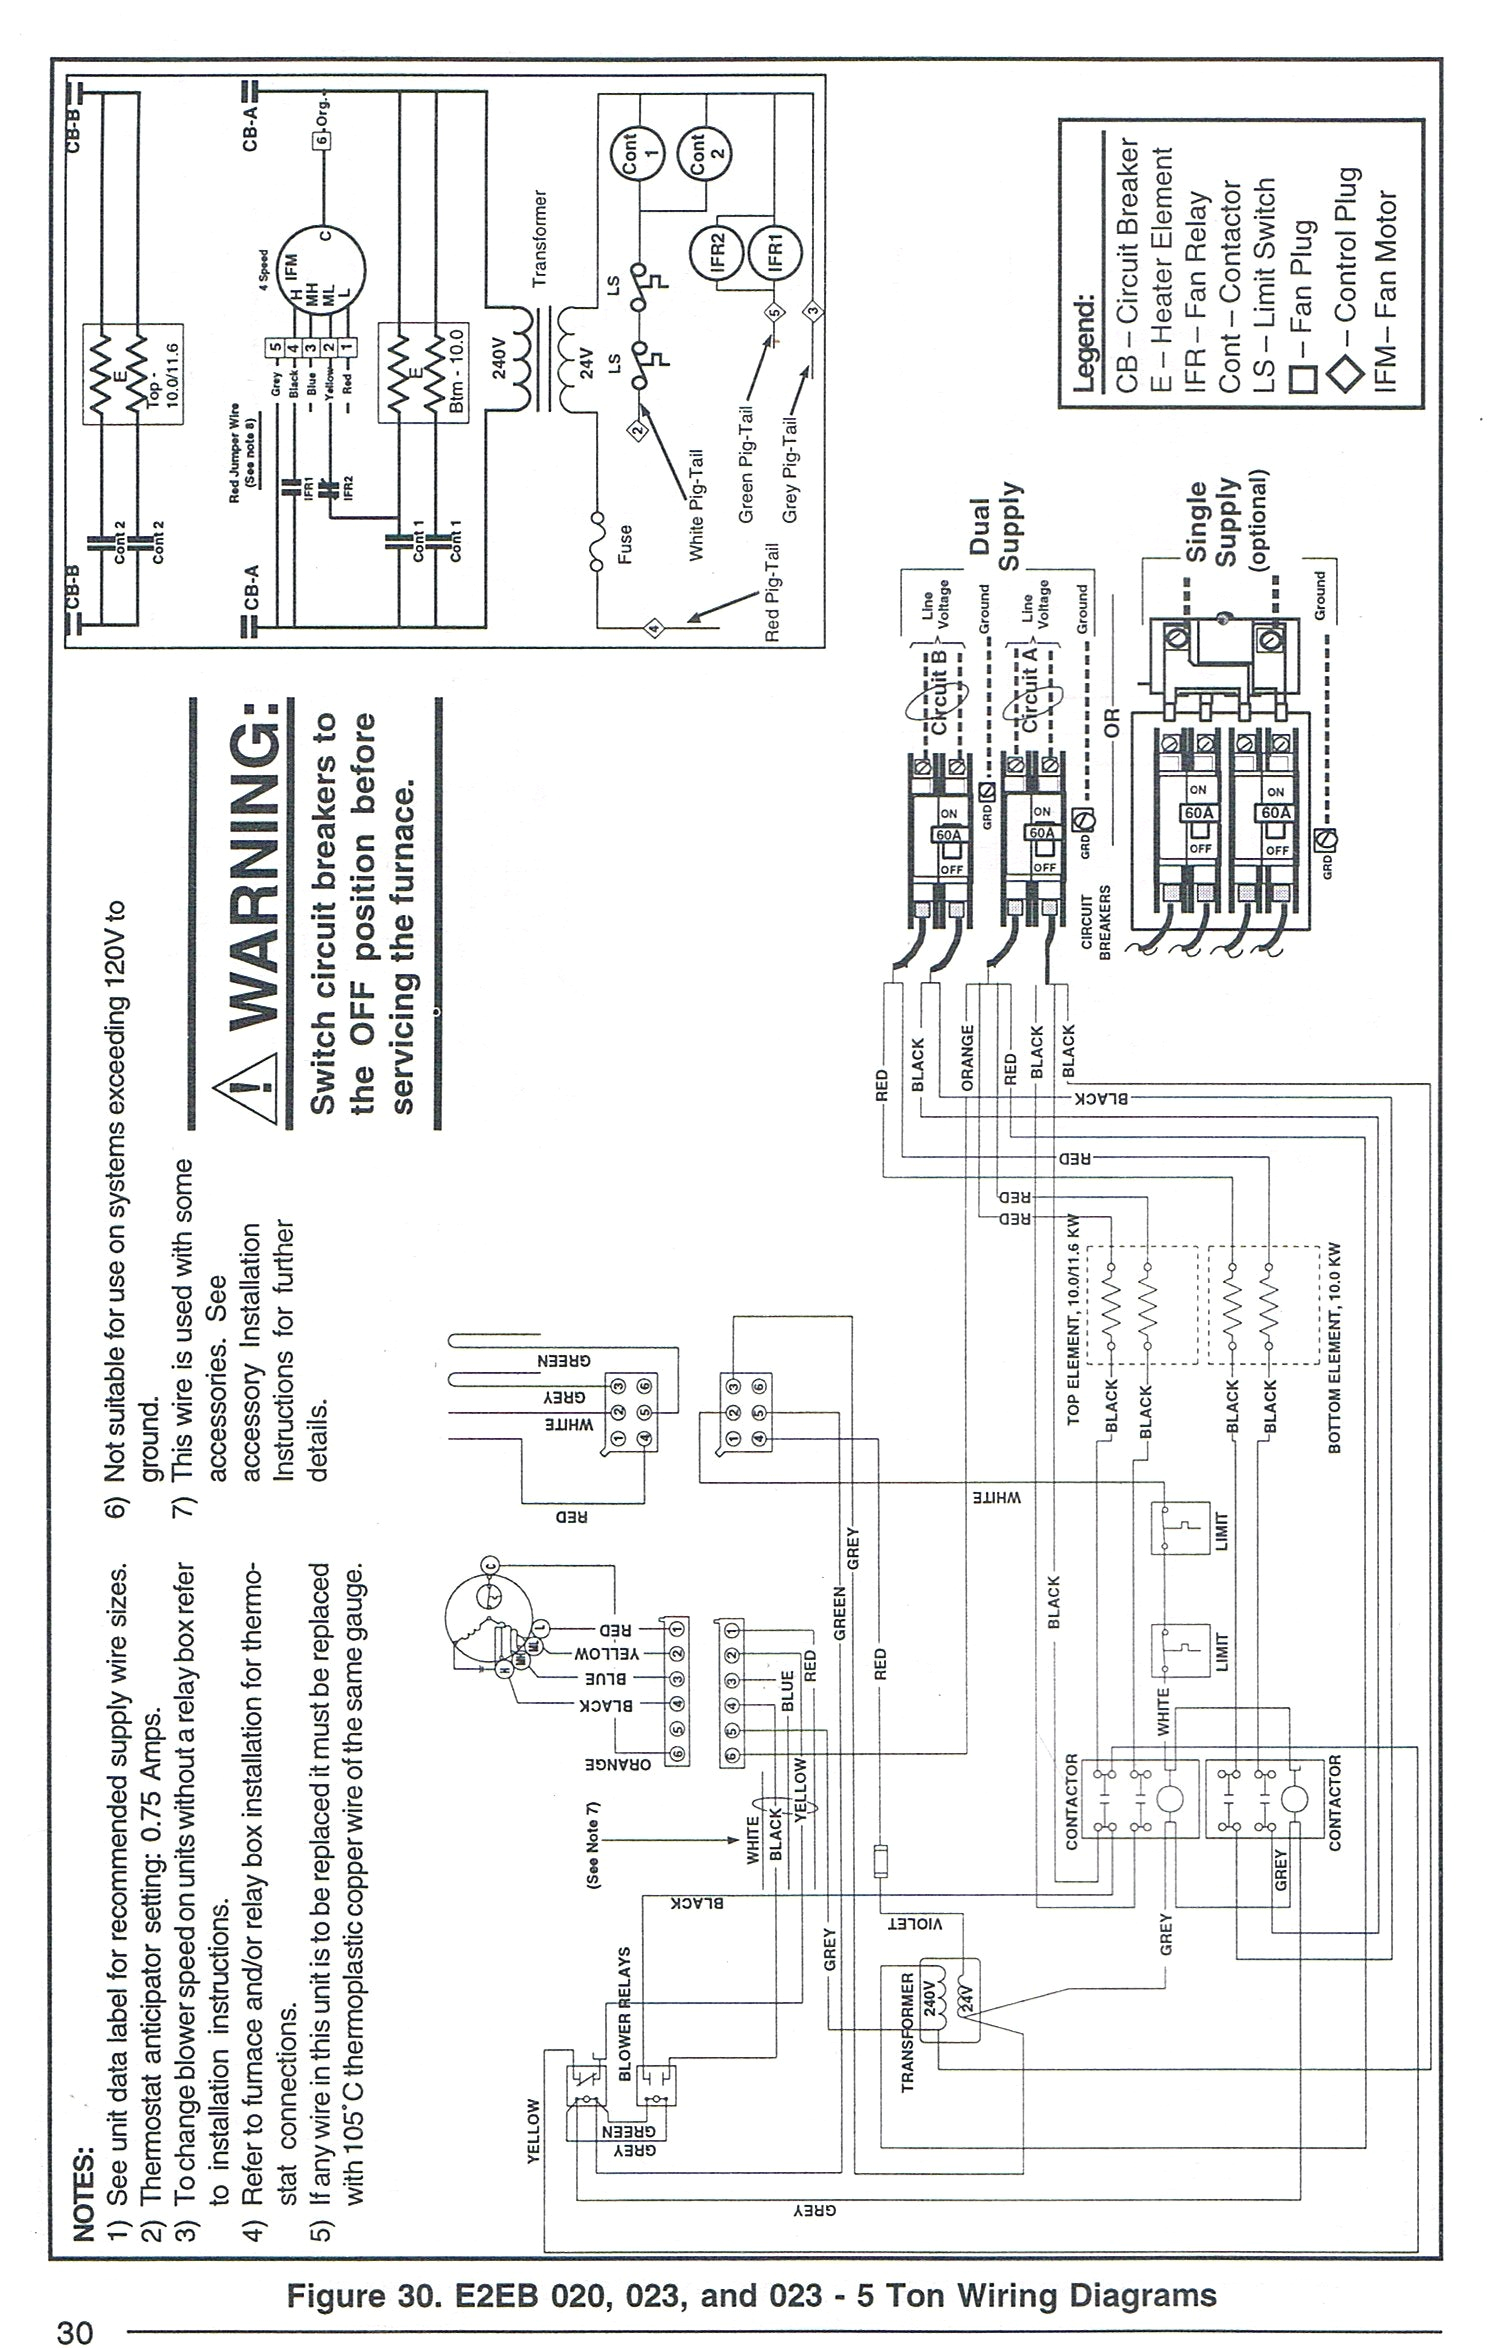 wiring schematic for thermostat wiring diagram database wiring diagram rheem electric furnace emprendedorlink